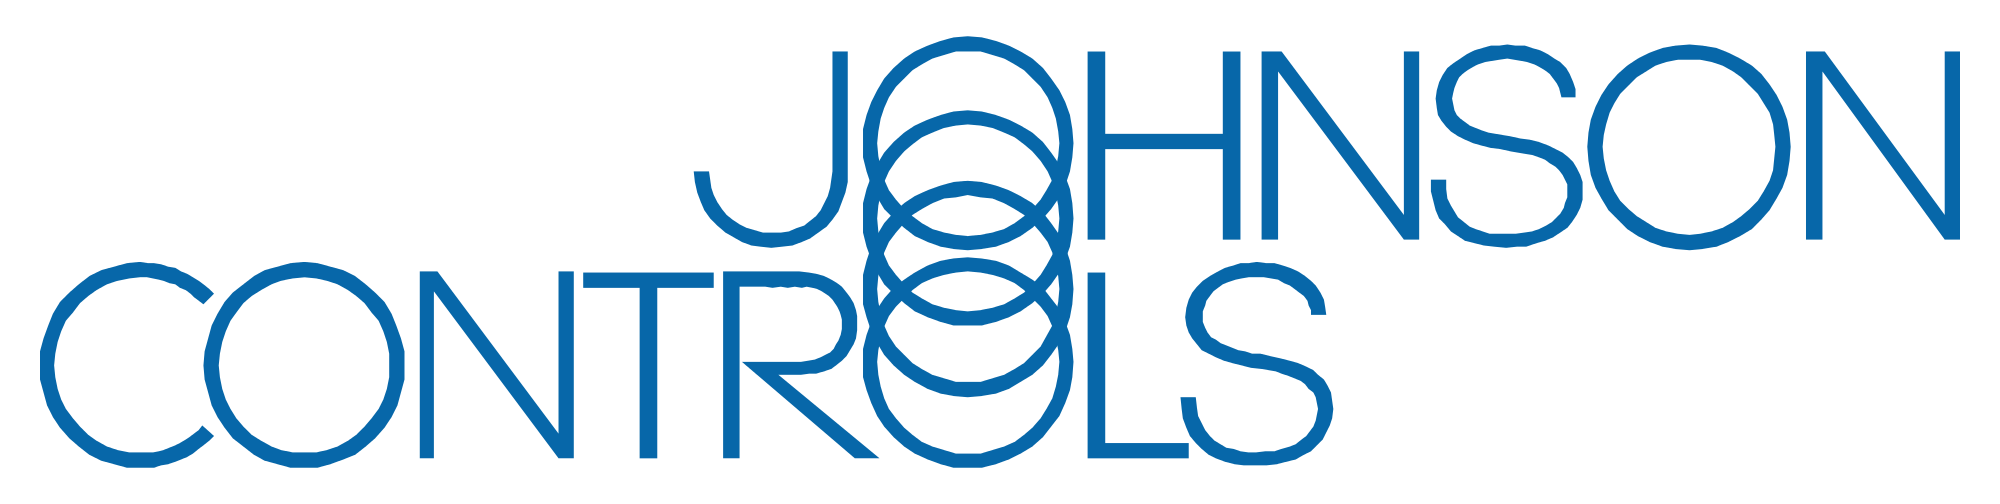 Johnson Controls Logo - Johnson Controls old logo.svg